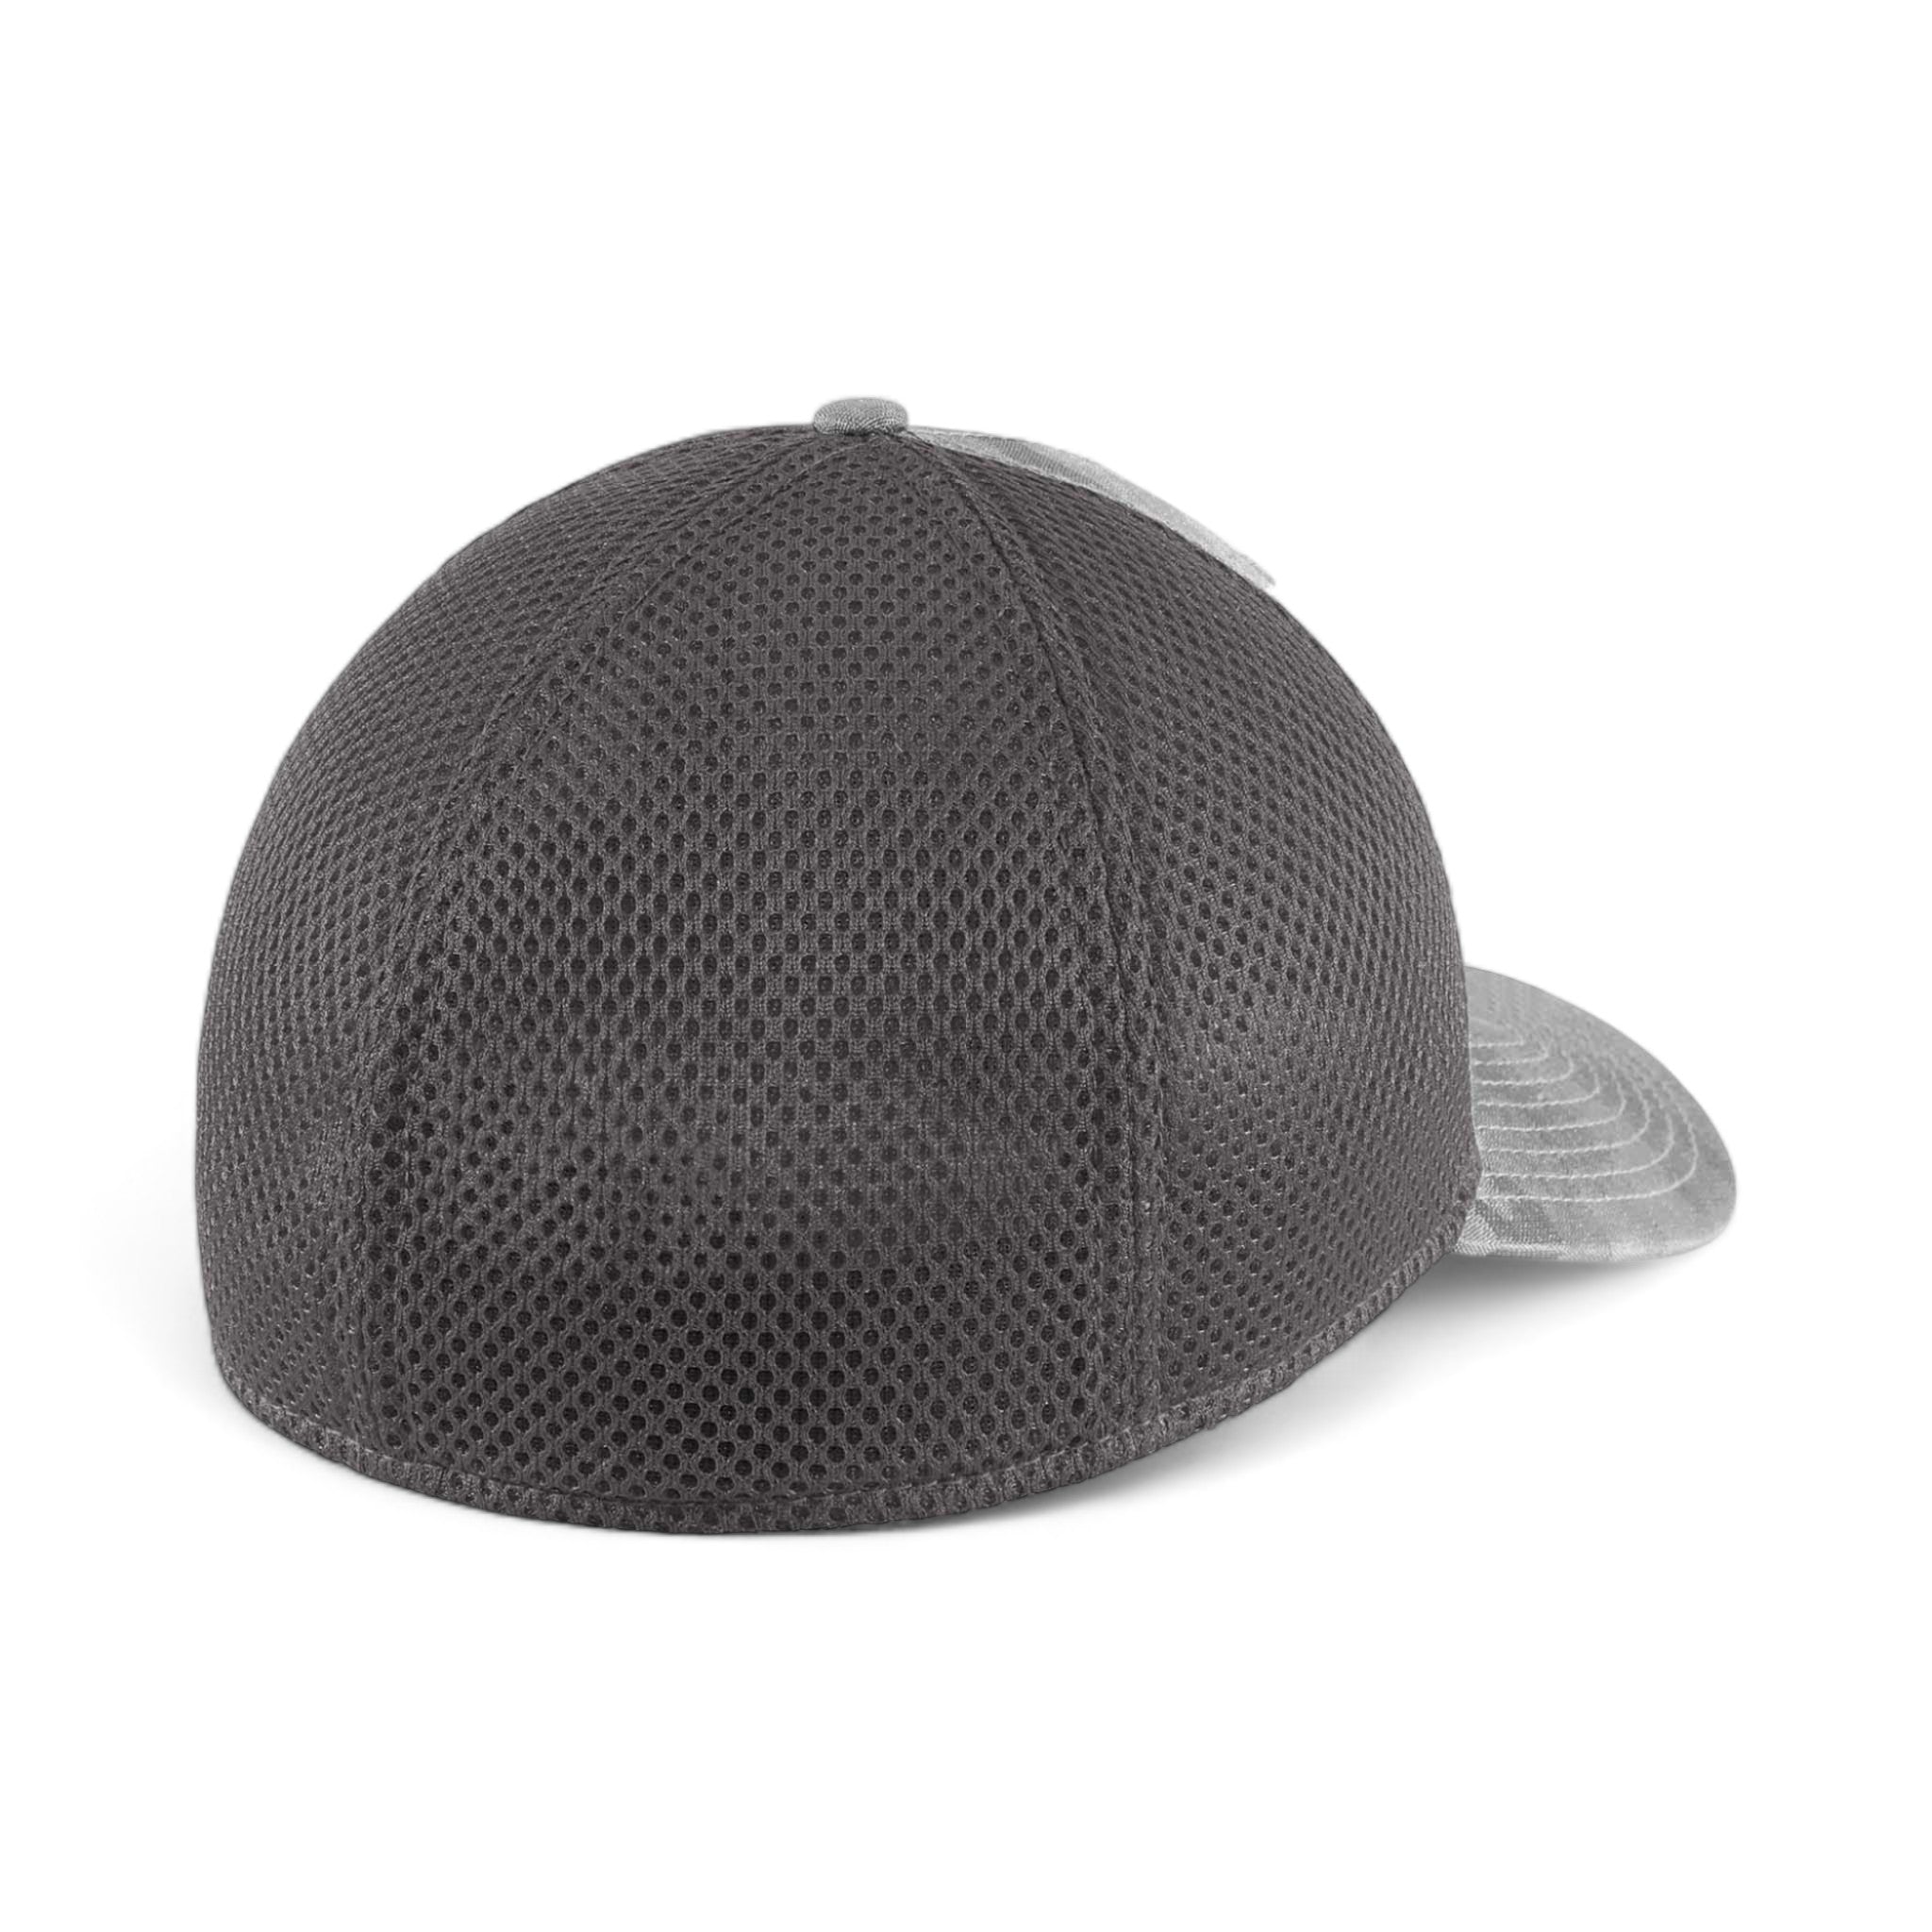 Back view of New Era NE1091 custom hat in rainstorm grey camo and graphite